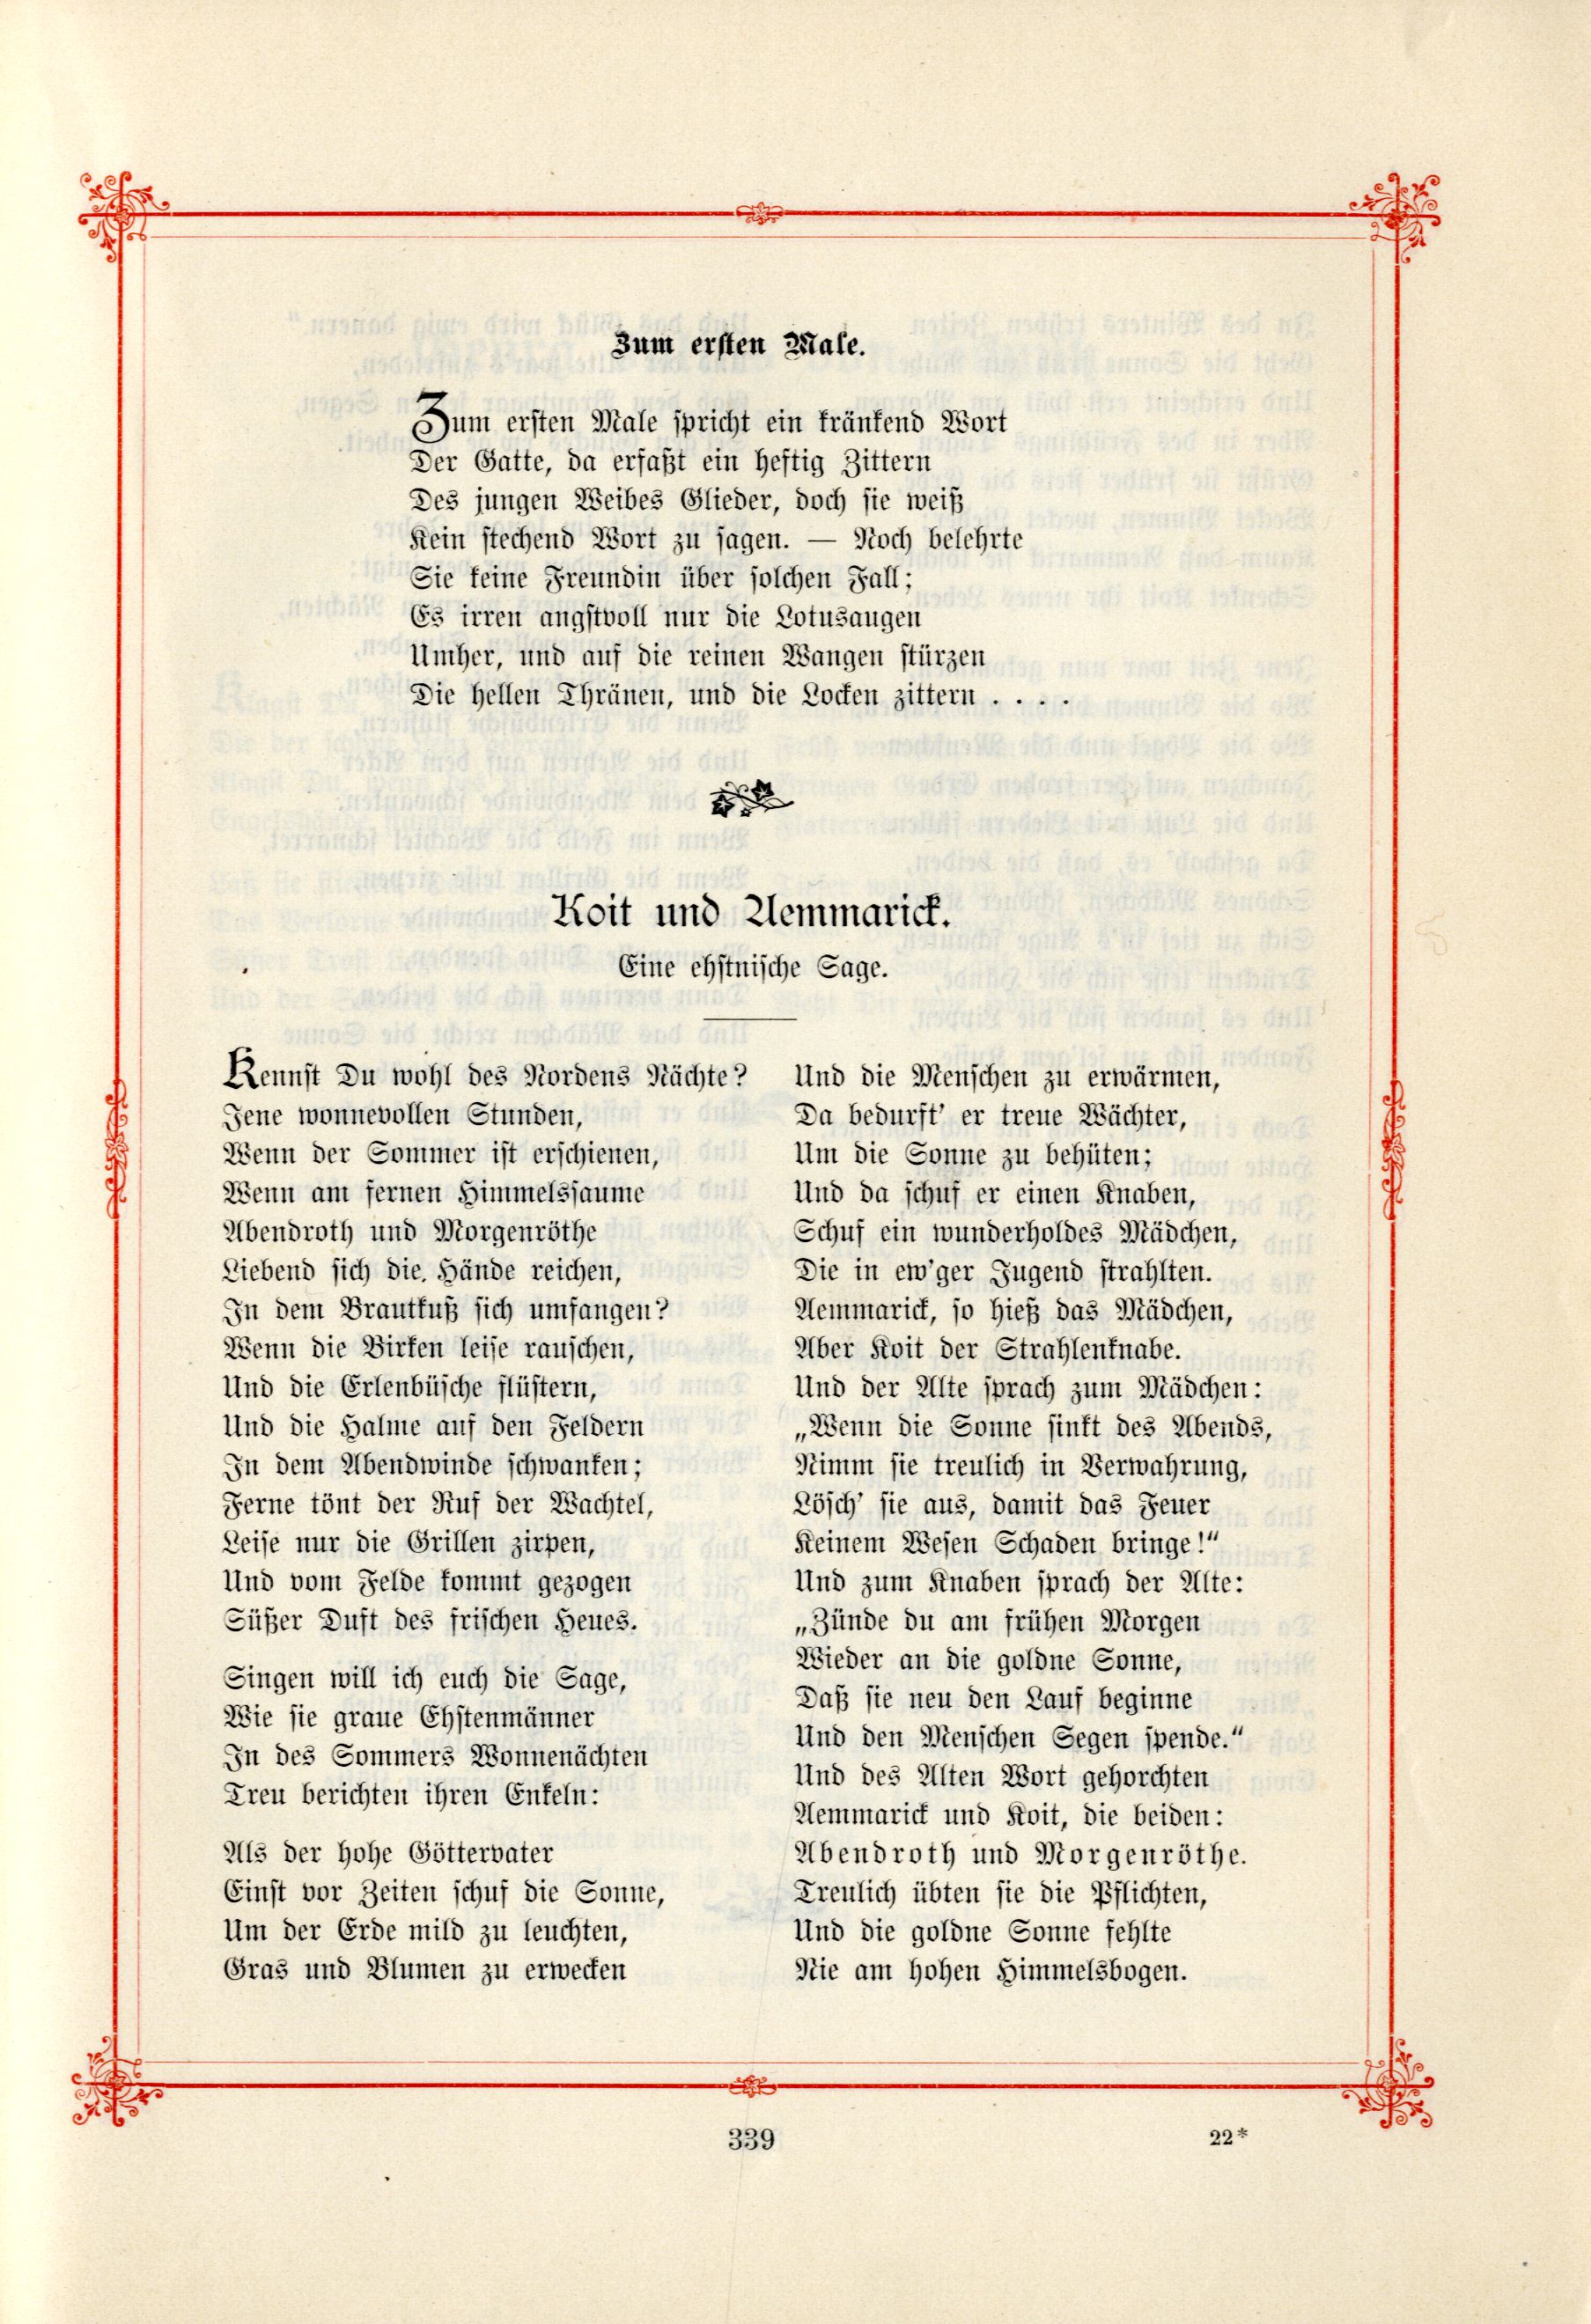 Das Baltische Dichterbuch (1895) | 385. (339) Основной текст